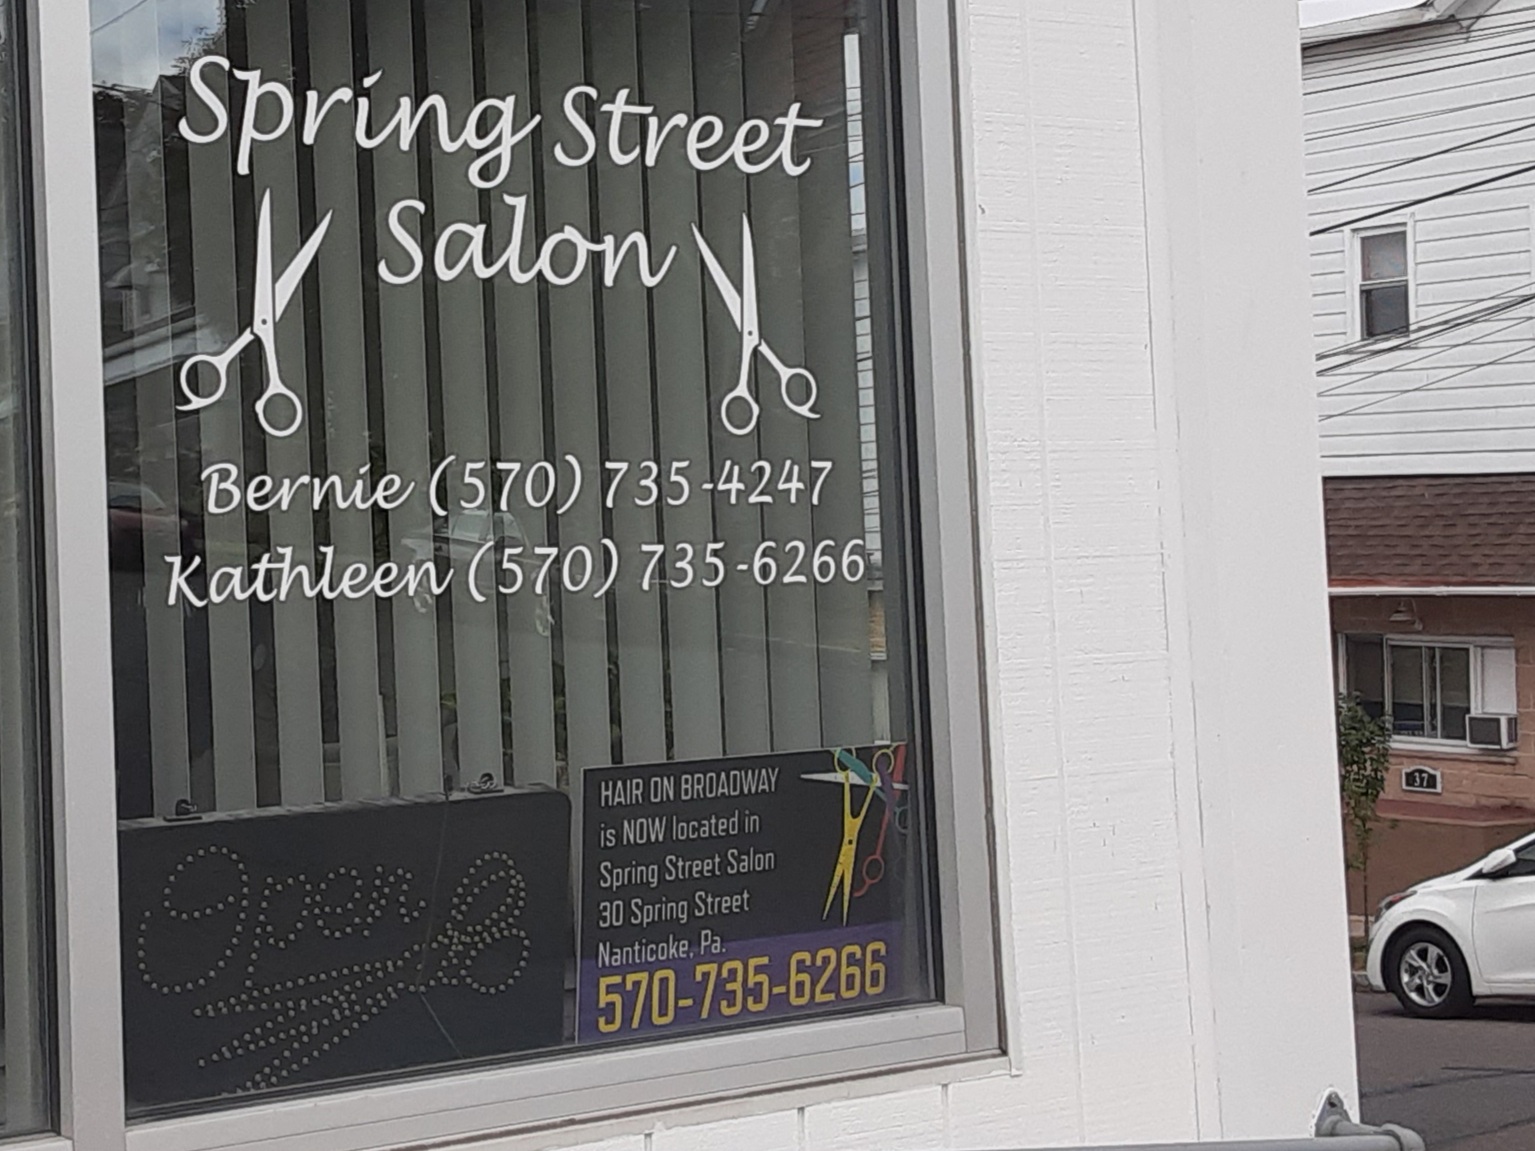 Hair On Broadway at the Spring Street Salon 30 E Spring St, Nanticoke Pennsylvania 18634